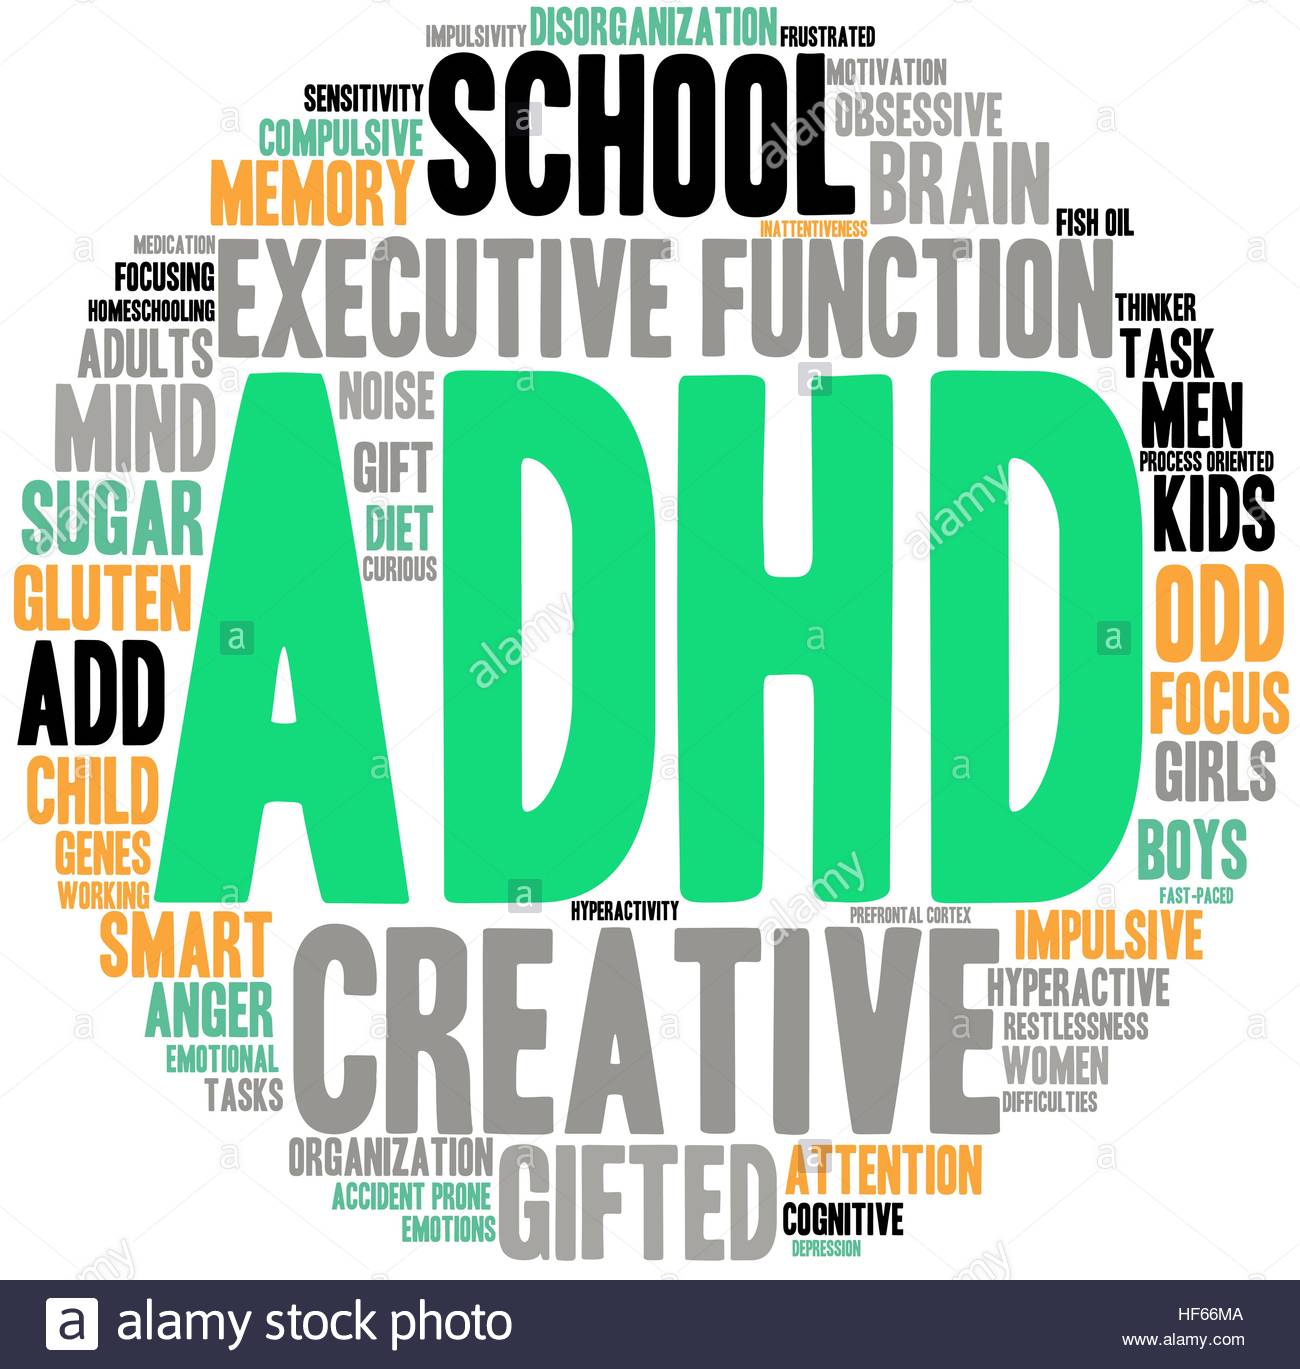 ADHD Wallpaper by Trecket on DeviantArt